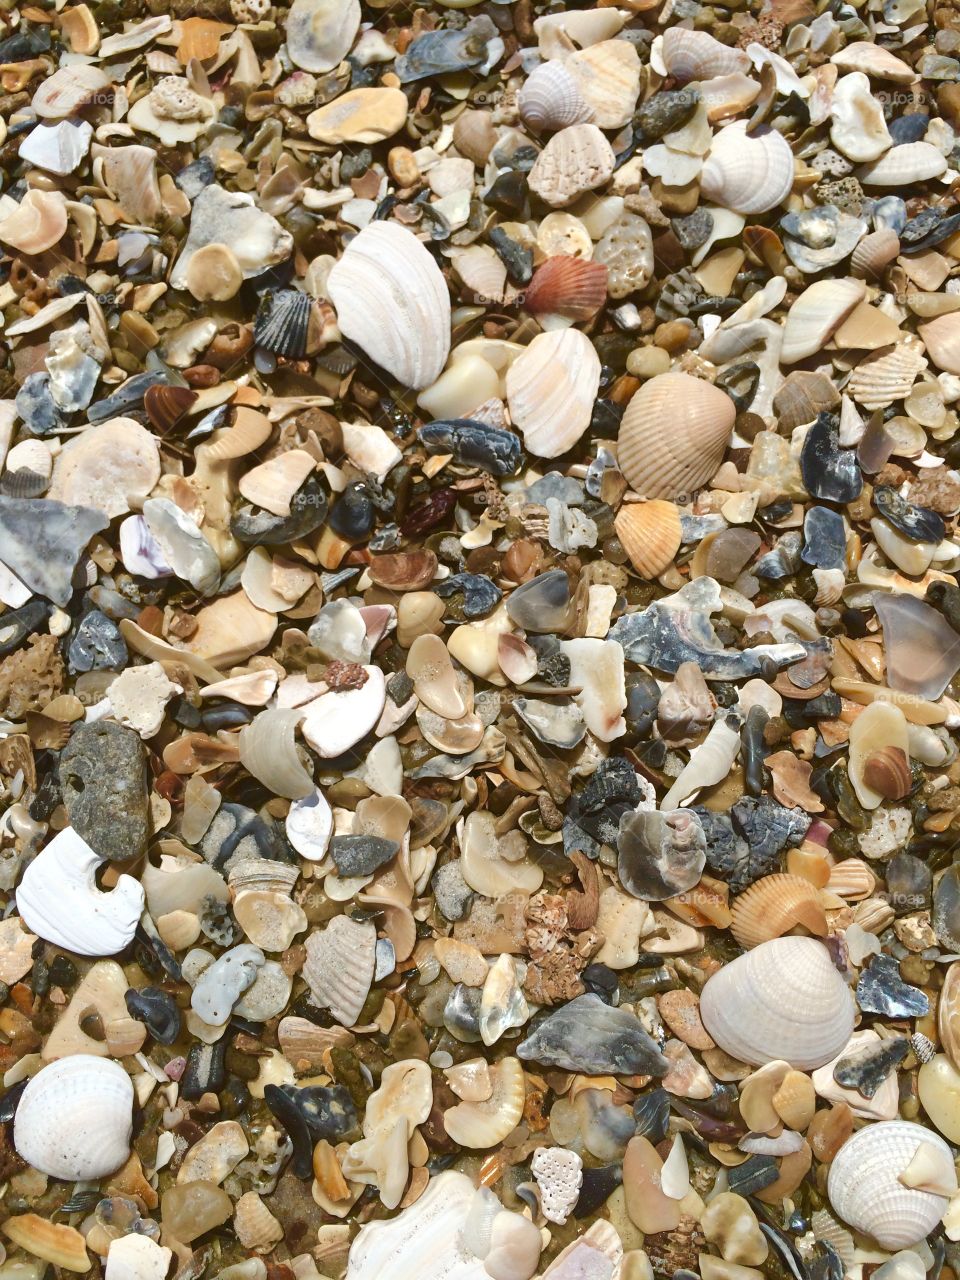 Shells washed ashore